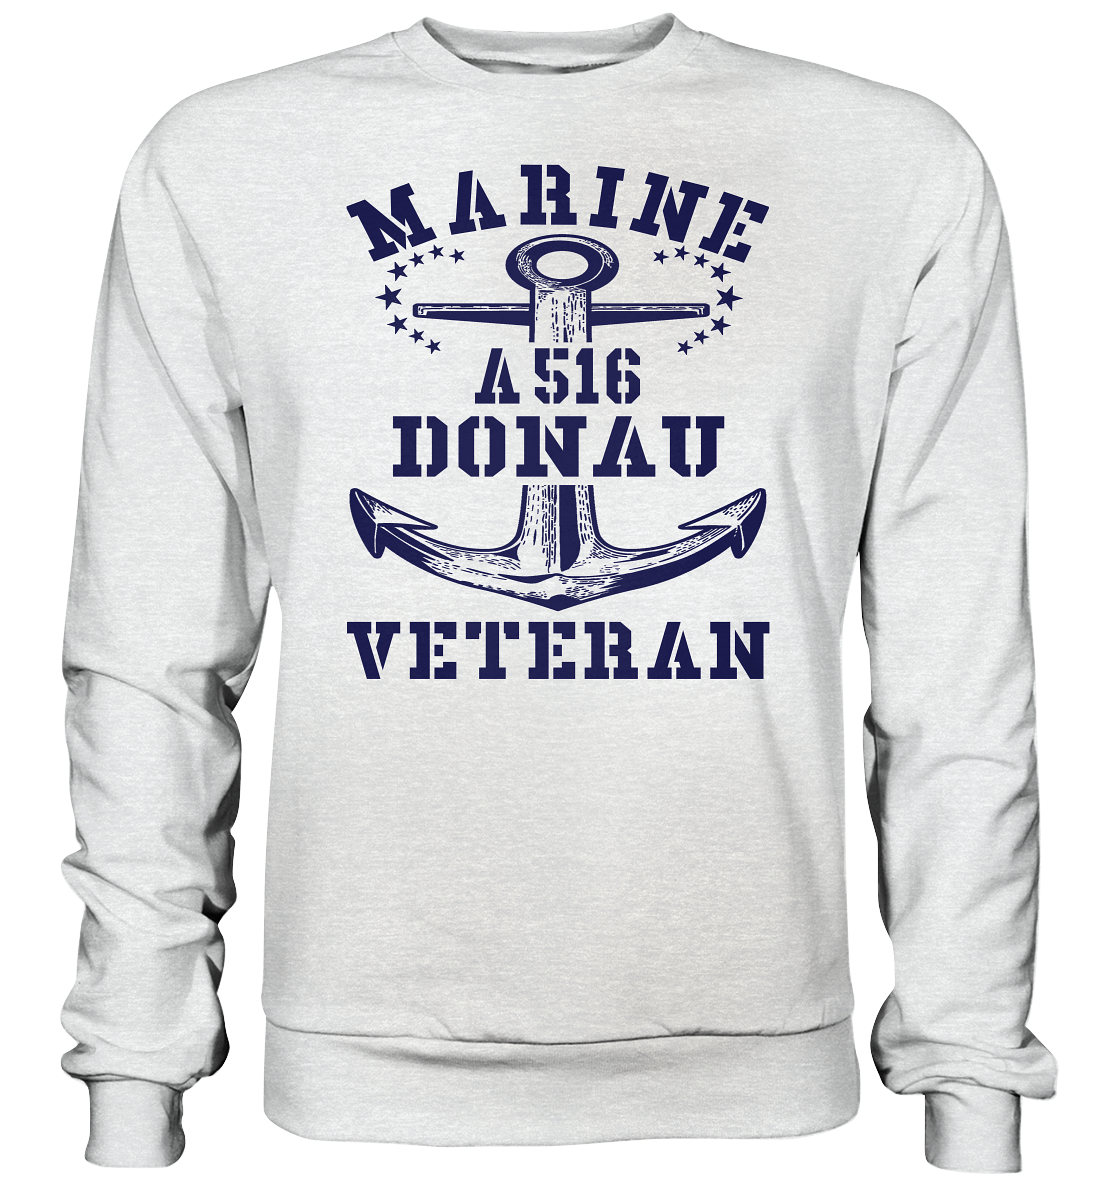 Tender A516 DONAU Marine Veteran  - Premium Sweatshirt